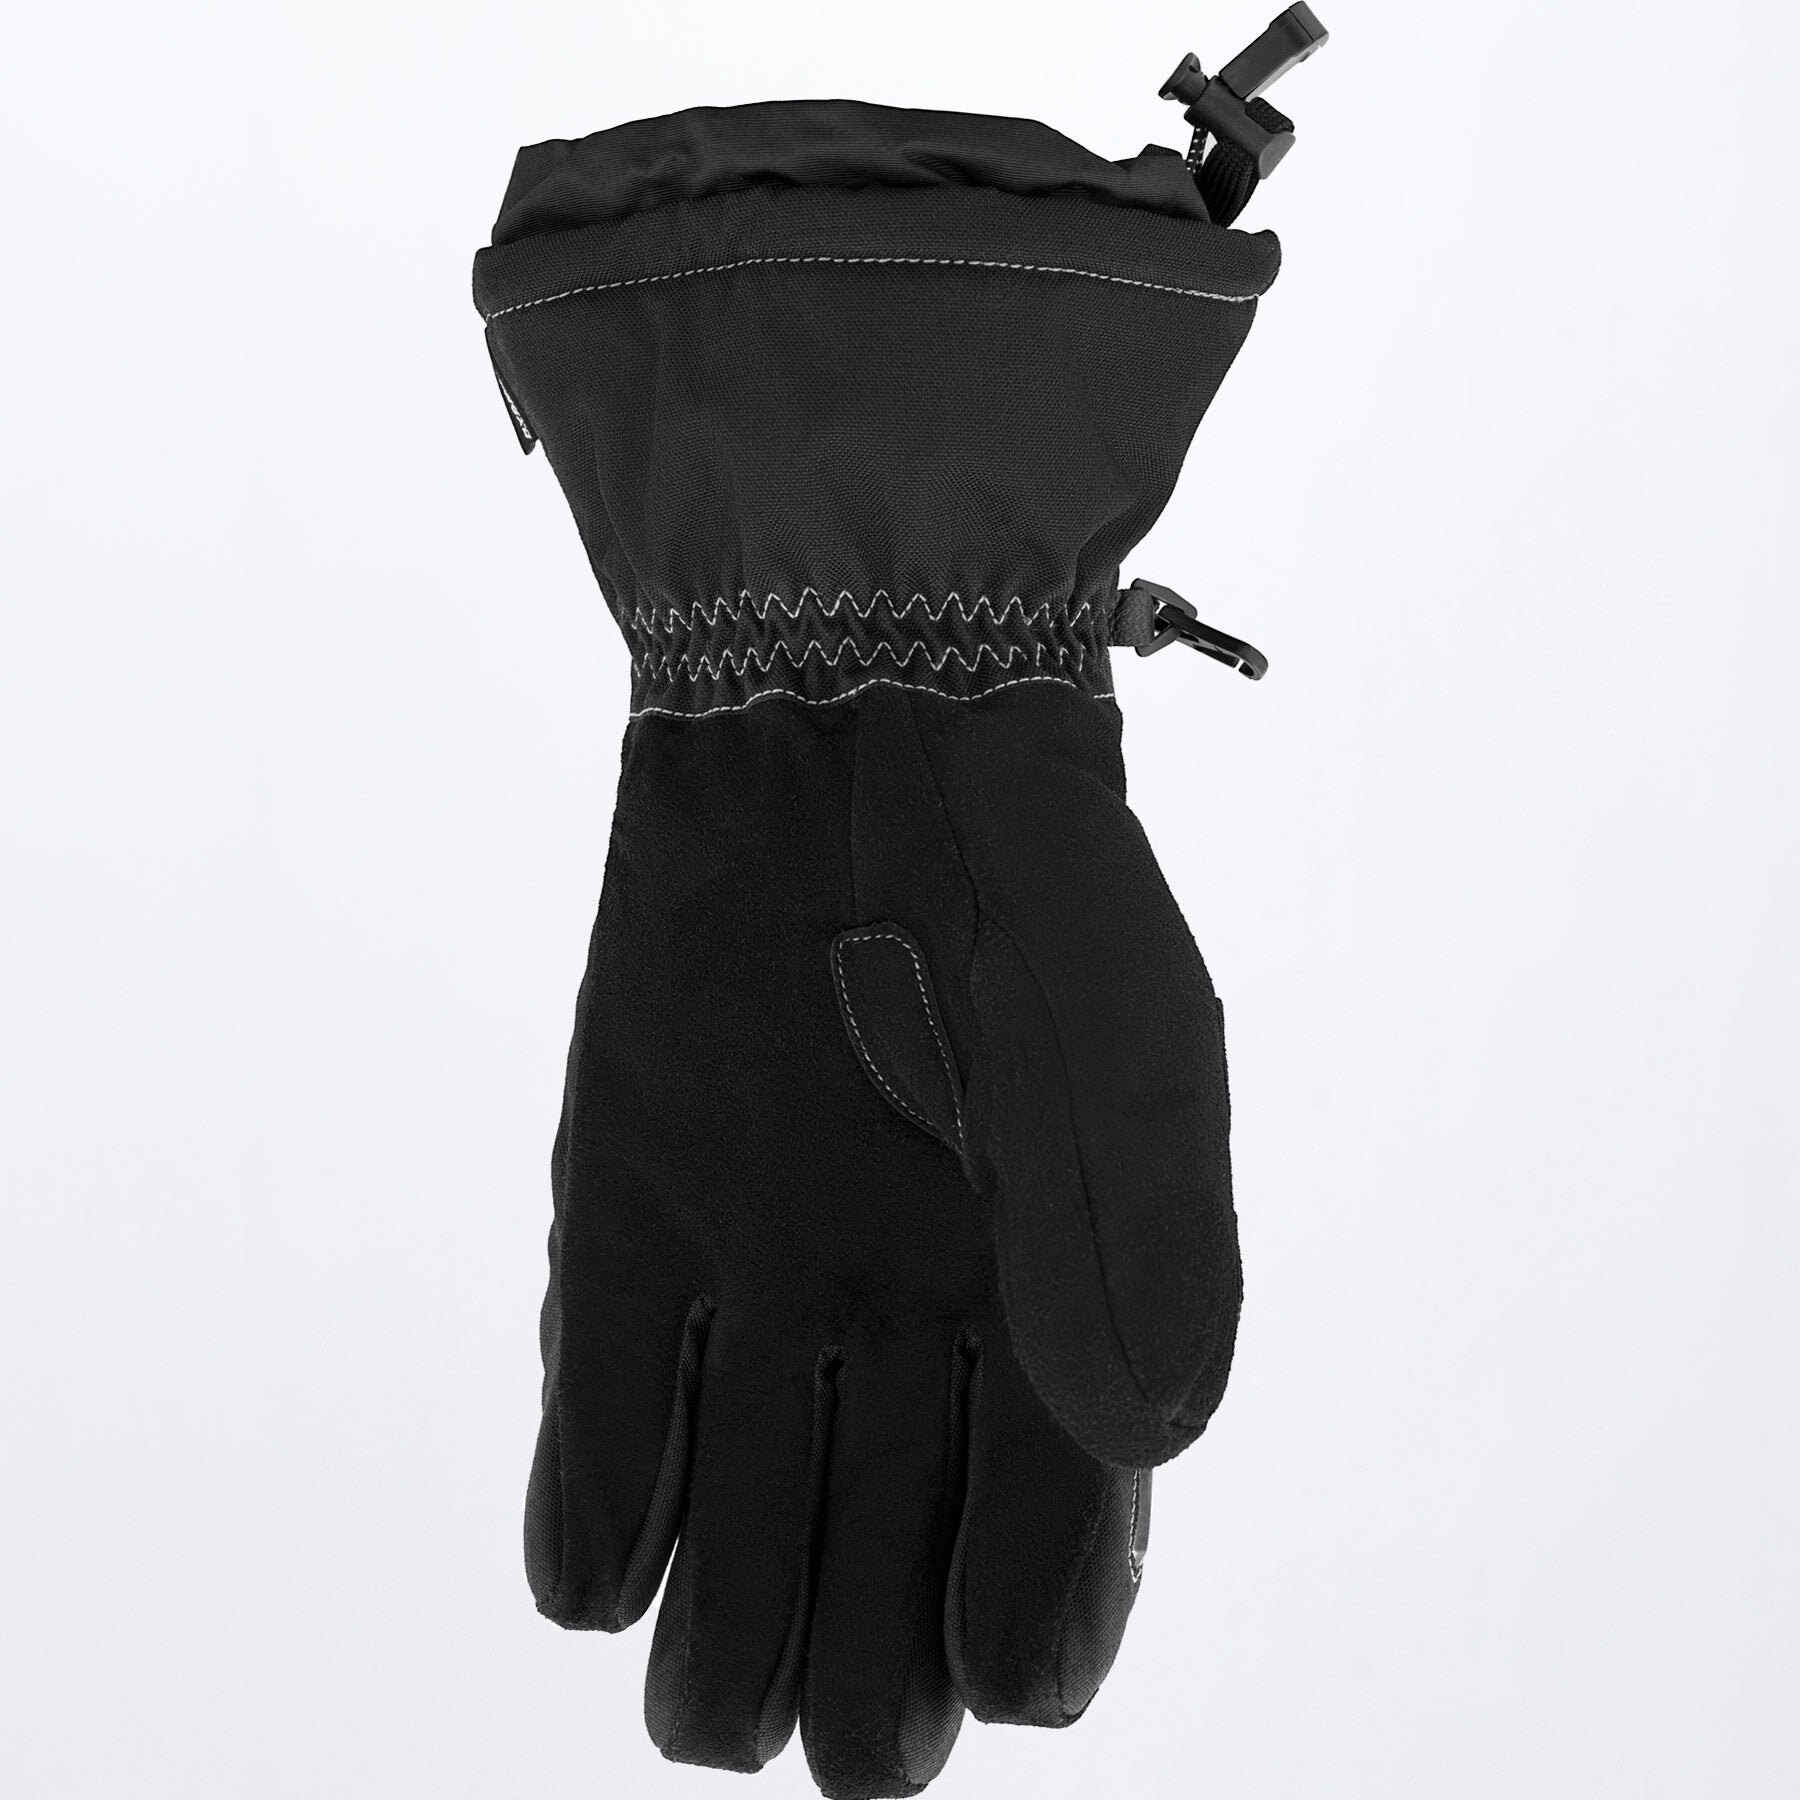 Men's CX Glove XL Black